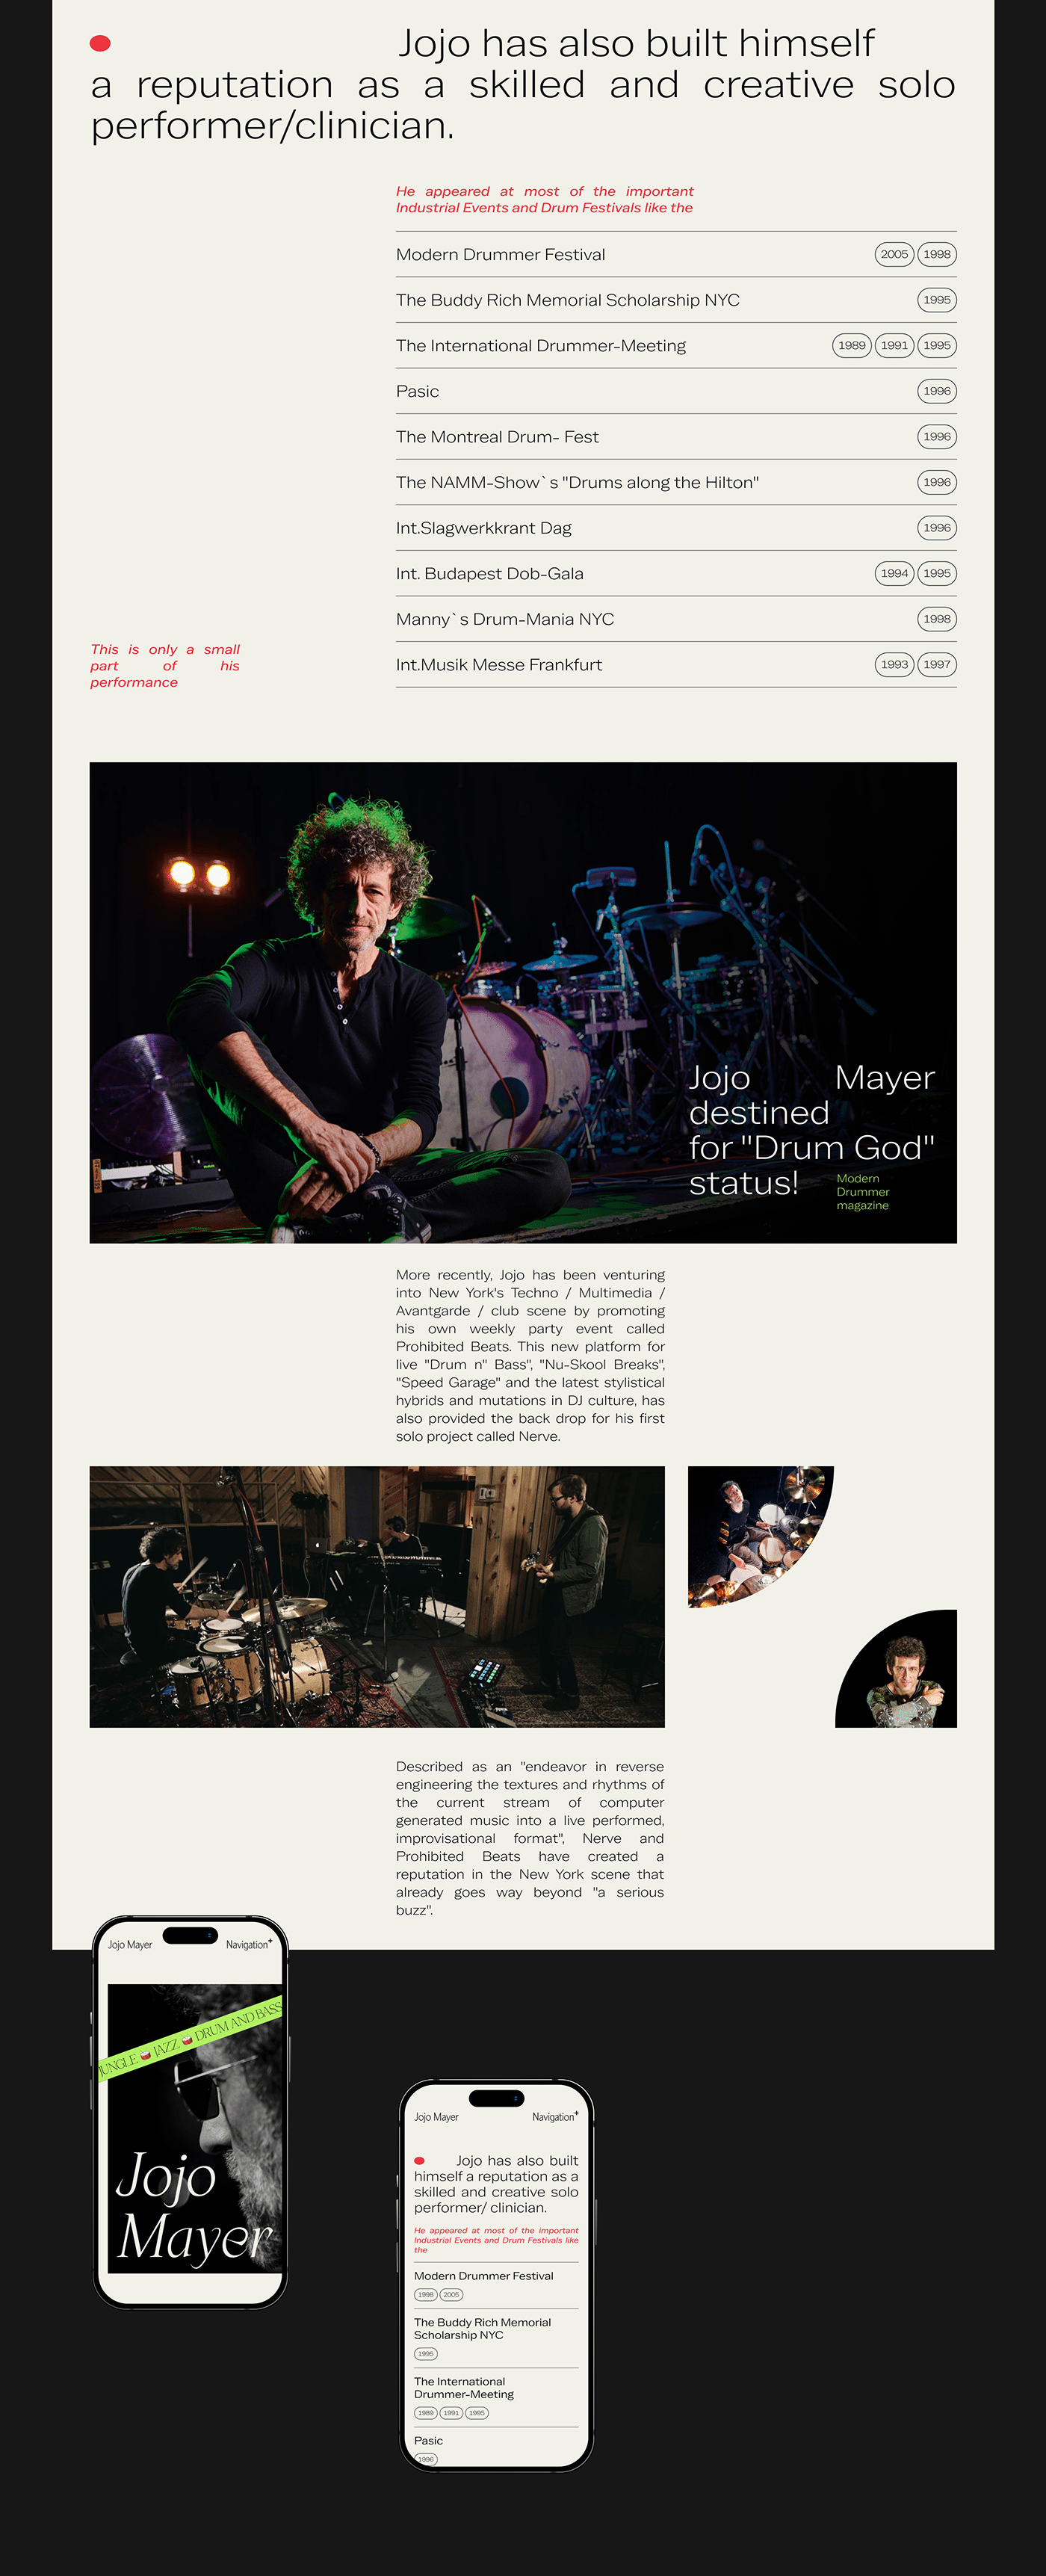 ArtDirection biography Biography of the musician drummer drums jojo mayer longread music Nerve portfolio